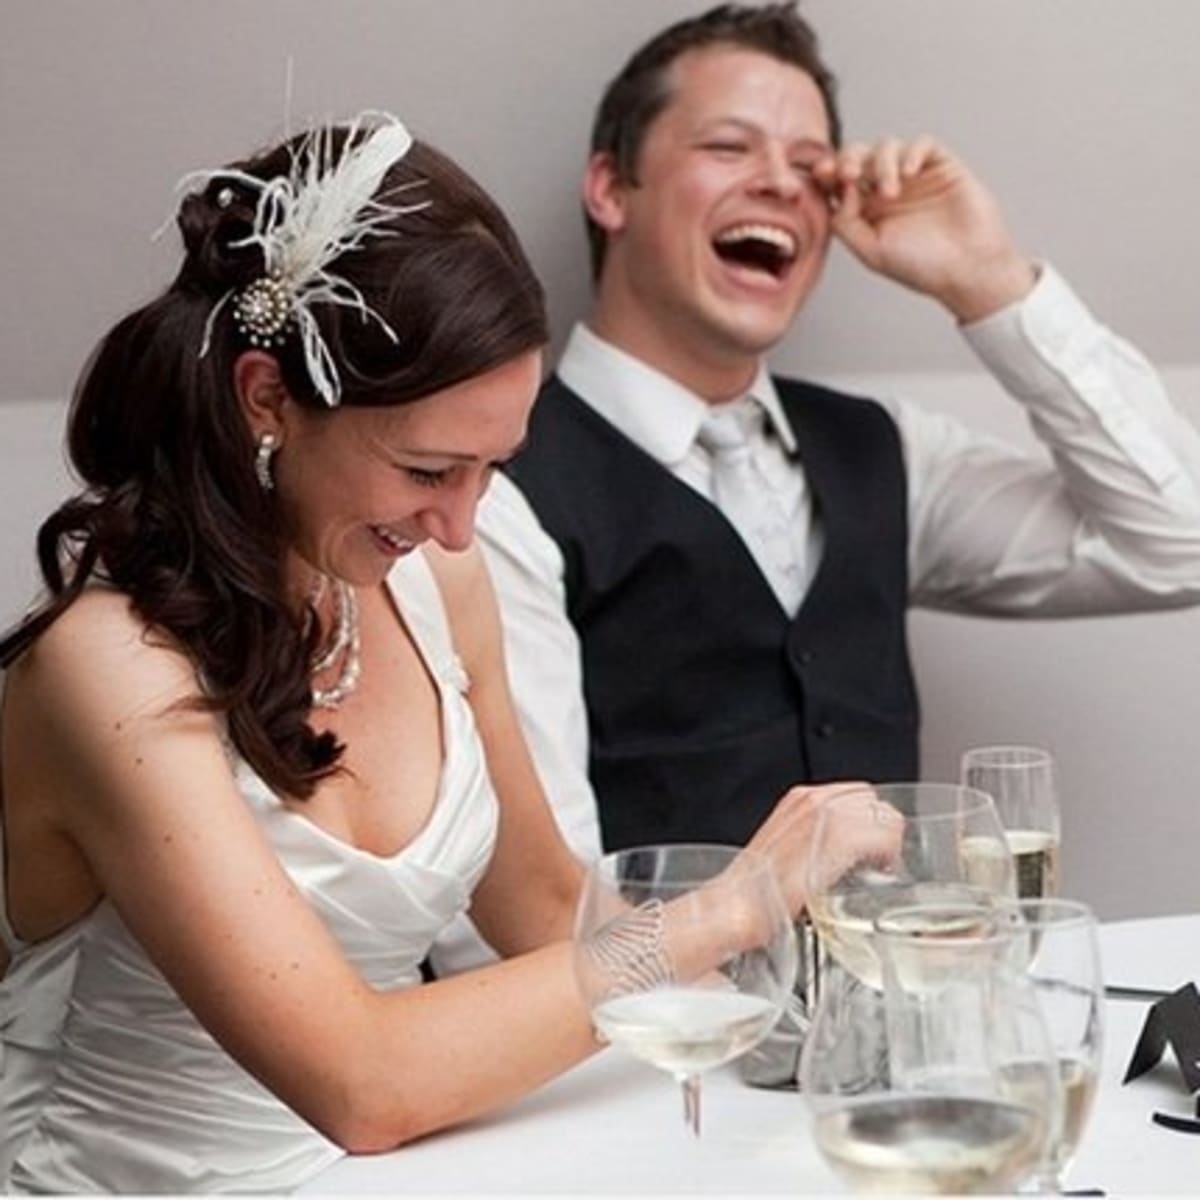 best wedding mc jokes how to make a wedding ceremony highly enjoyable